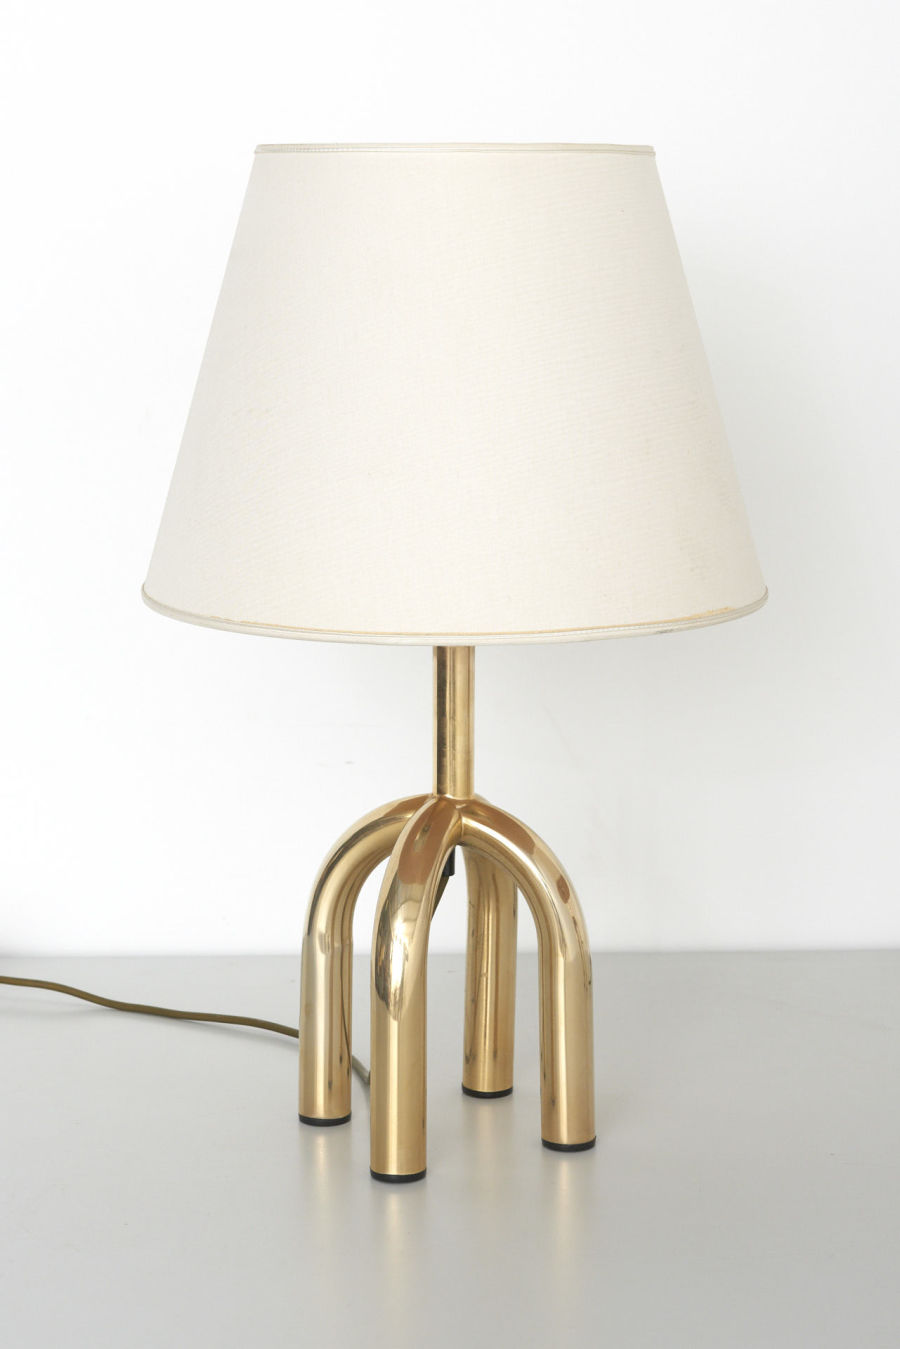 modestfurniture-vintage-2285-pair-table-lamps-4-brass-legs07